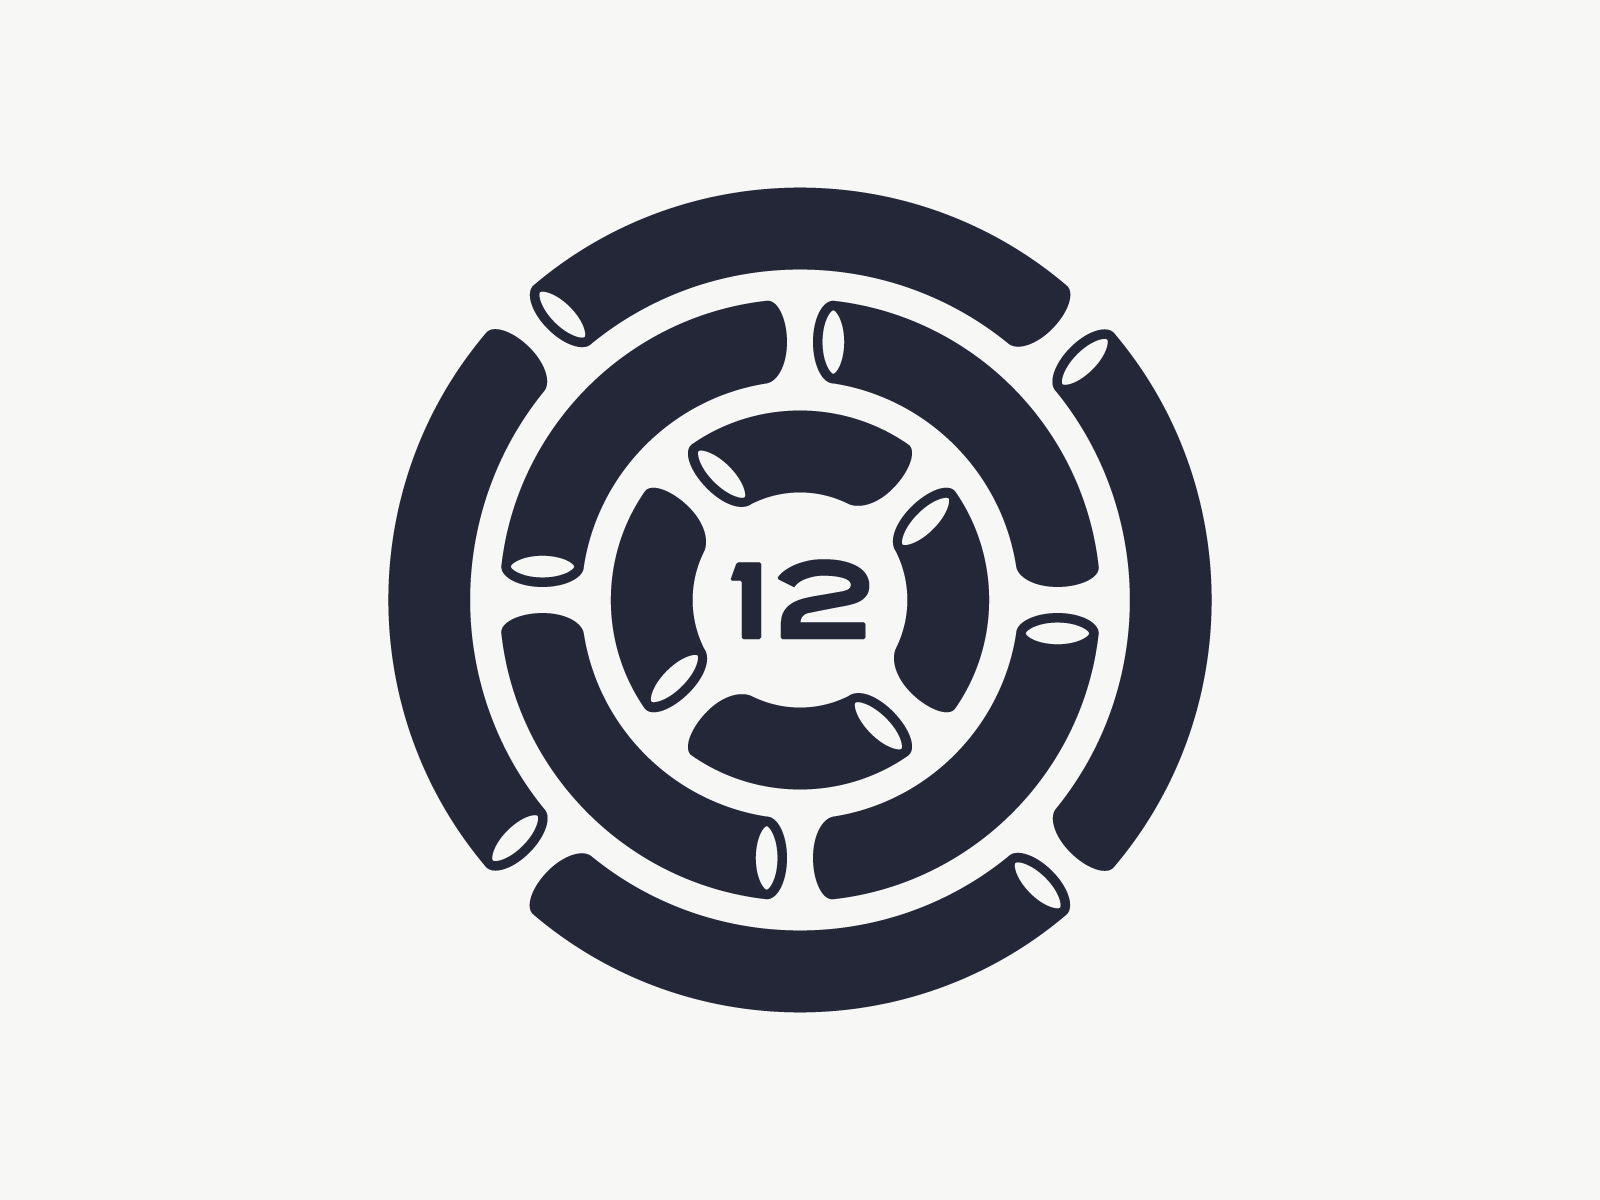 12 Tubes Animated Logomark